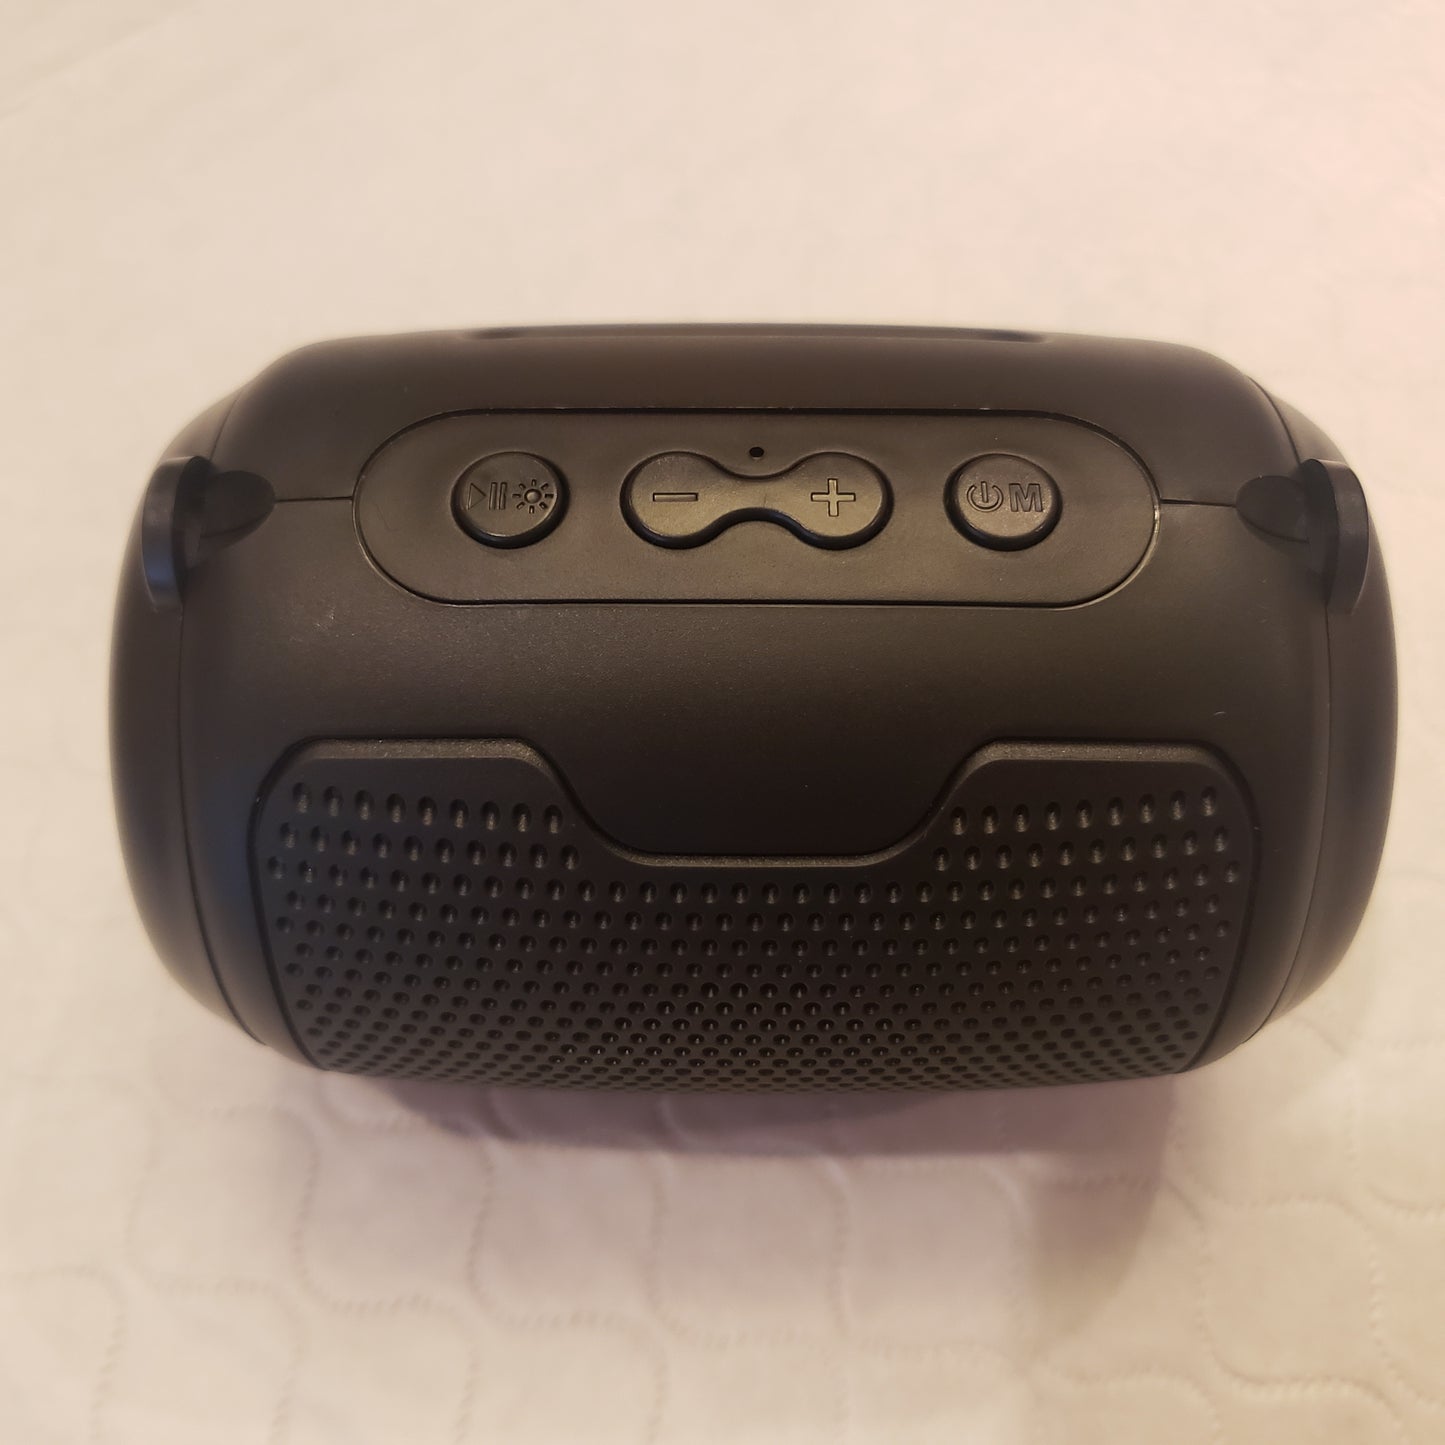 Bluetooth Portable 360 Degree Speaker